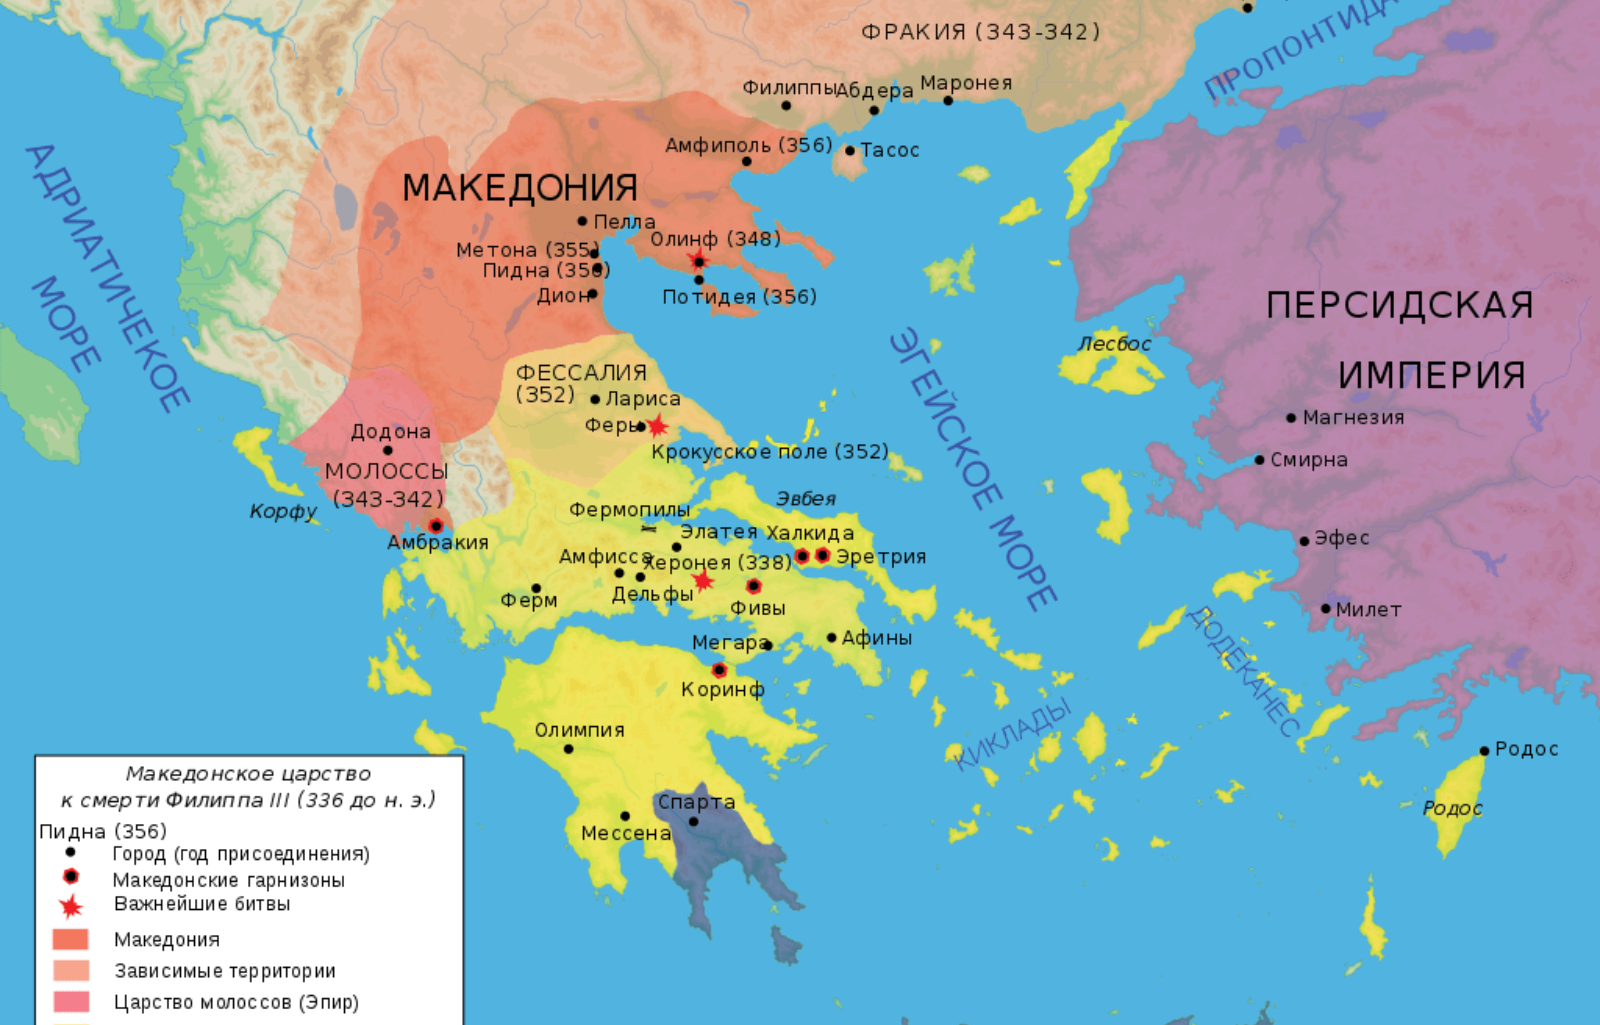 Греция накануне правления Александра Македонского.